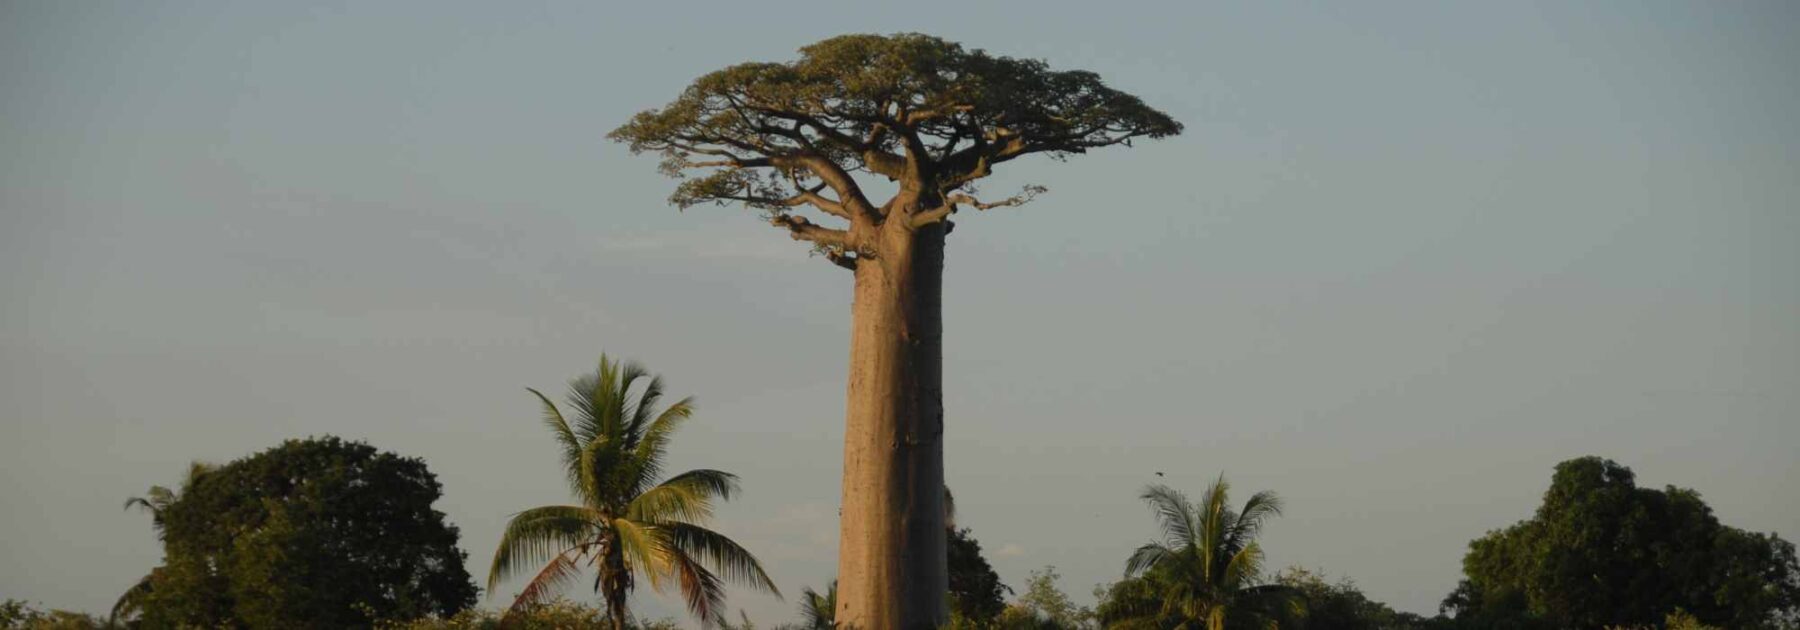 Adansonia - Baobab : planter et cultiver